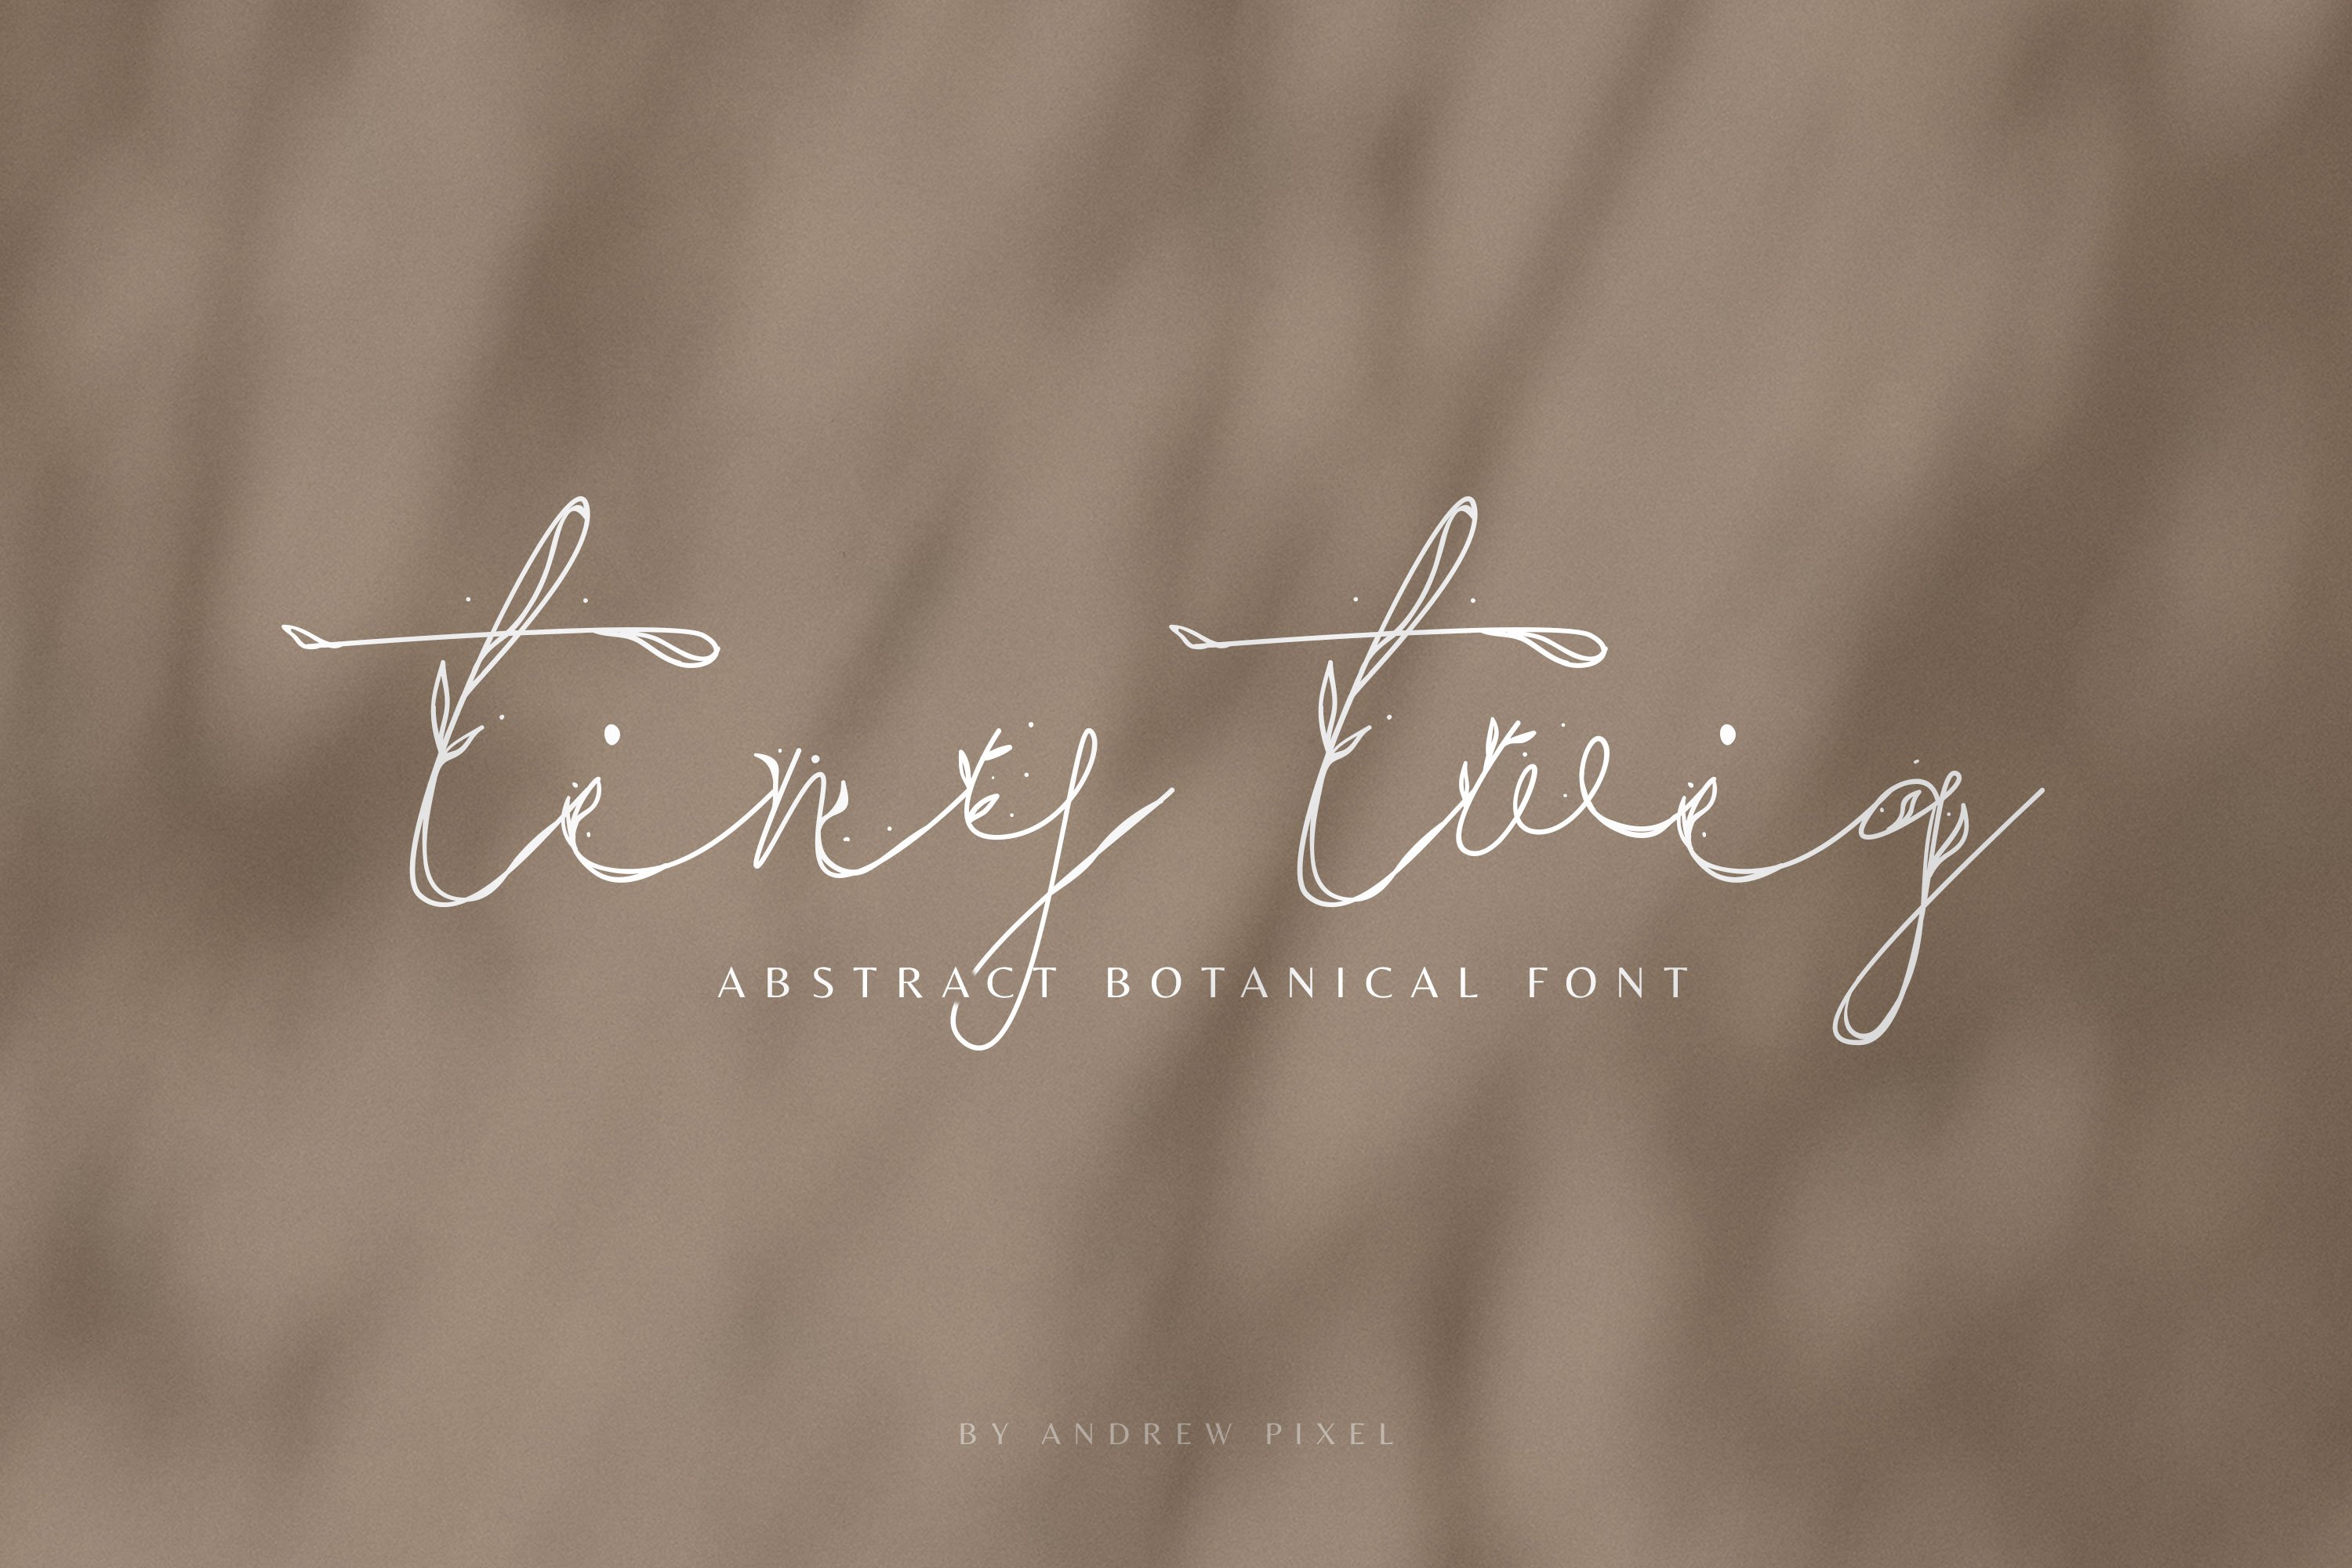 Tiny Twig - Botanical Display Font cover image.